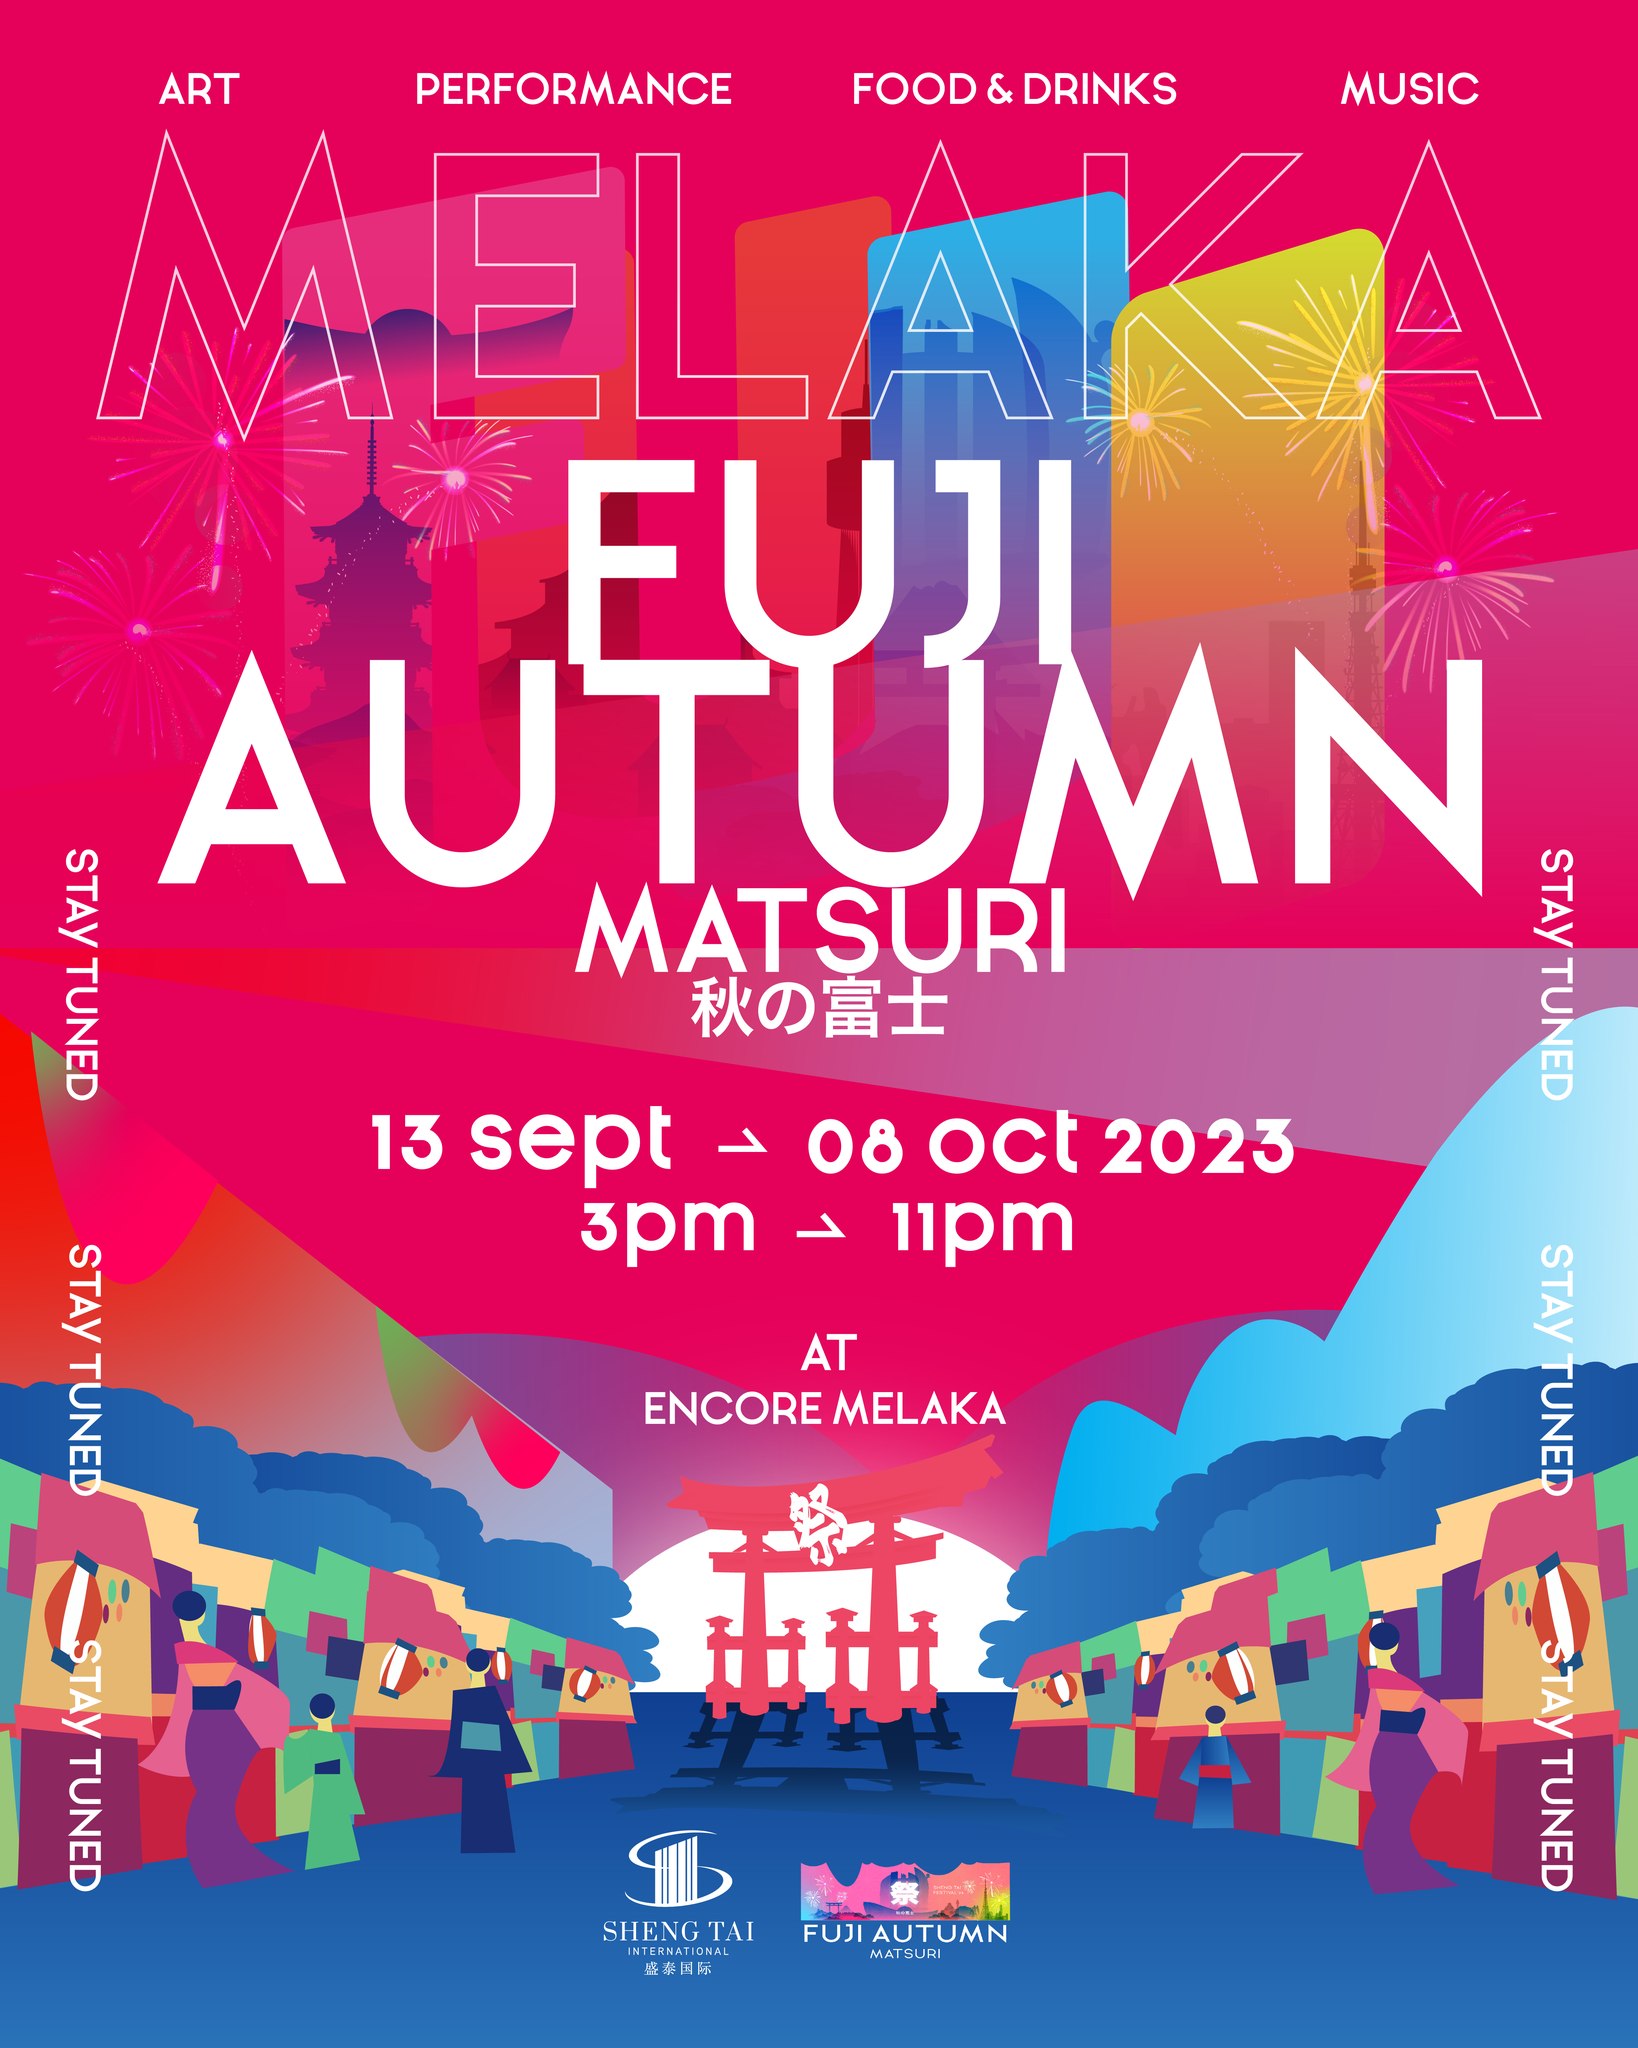 Fuji Autumn Matsuri